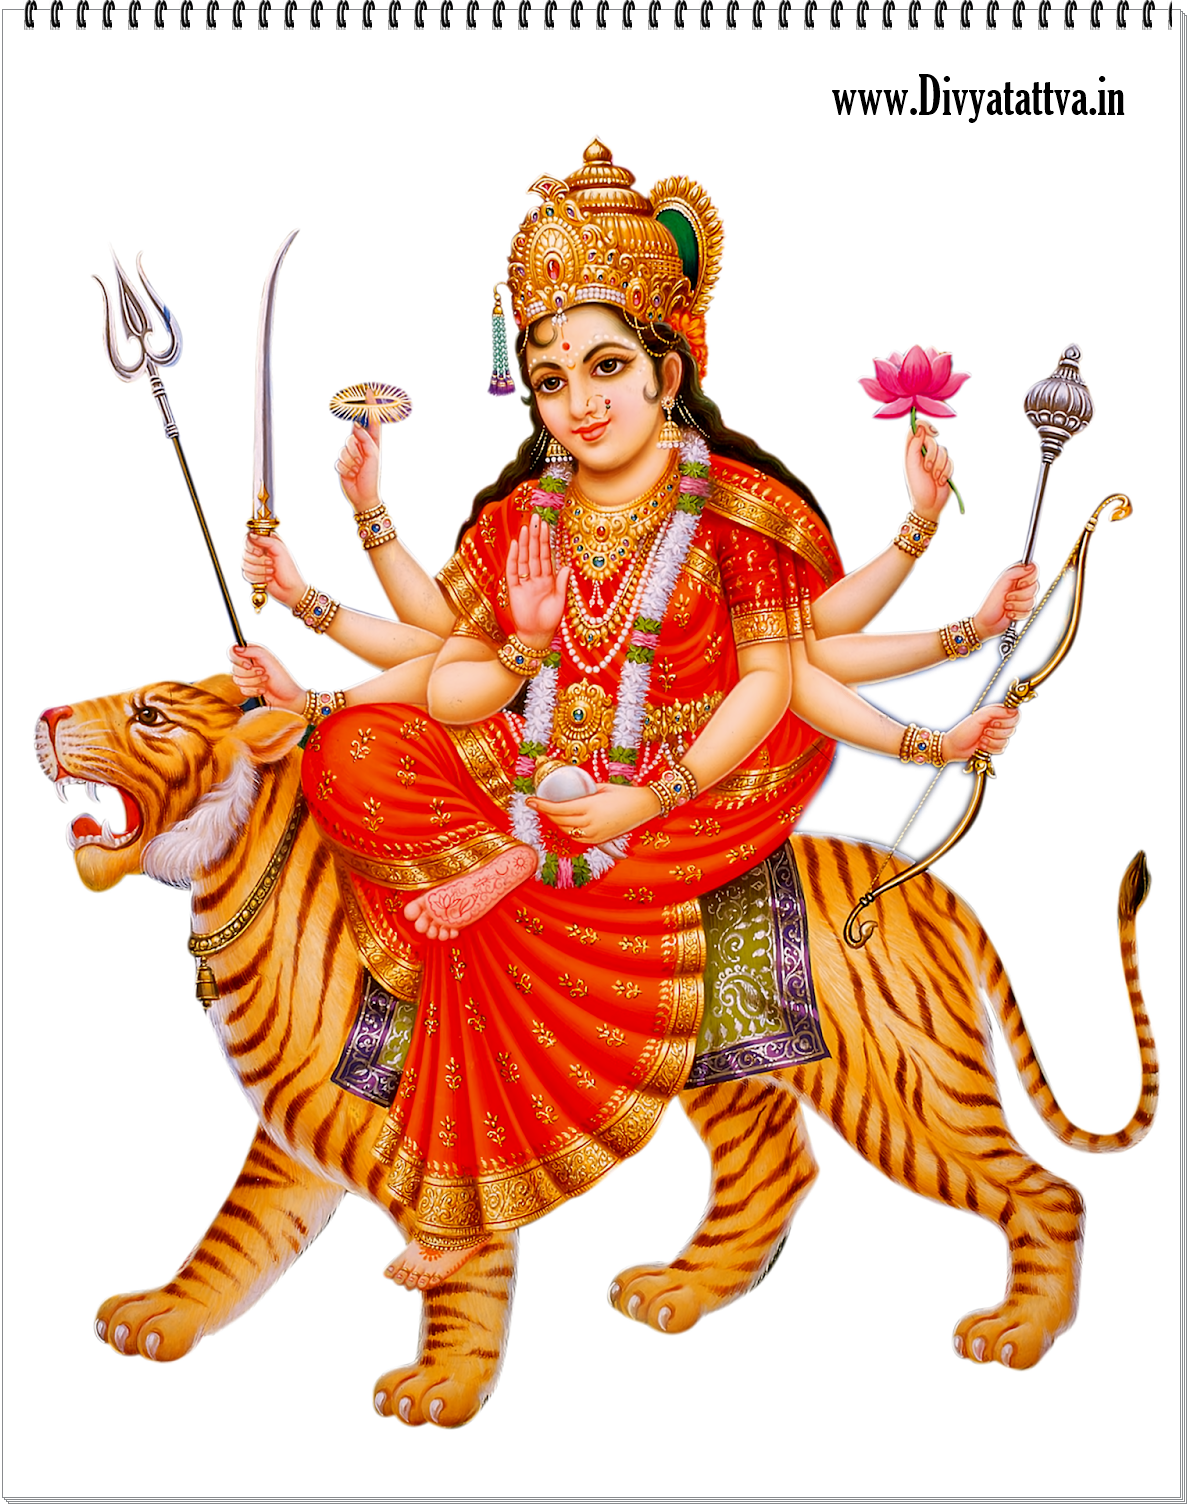 Goddess Durga Photos HD Navratri Pictures Maa Durga Photo Gallery